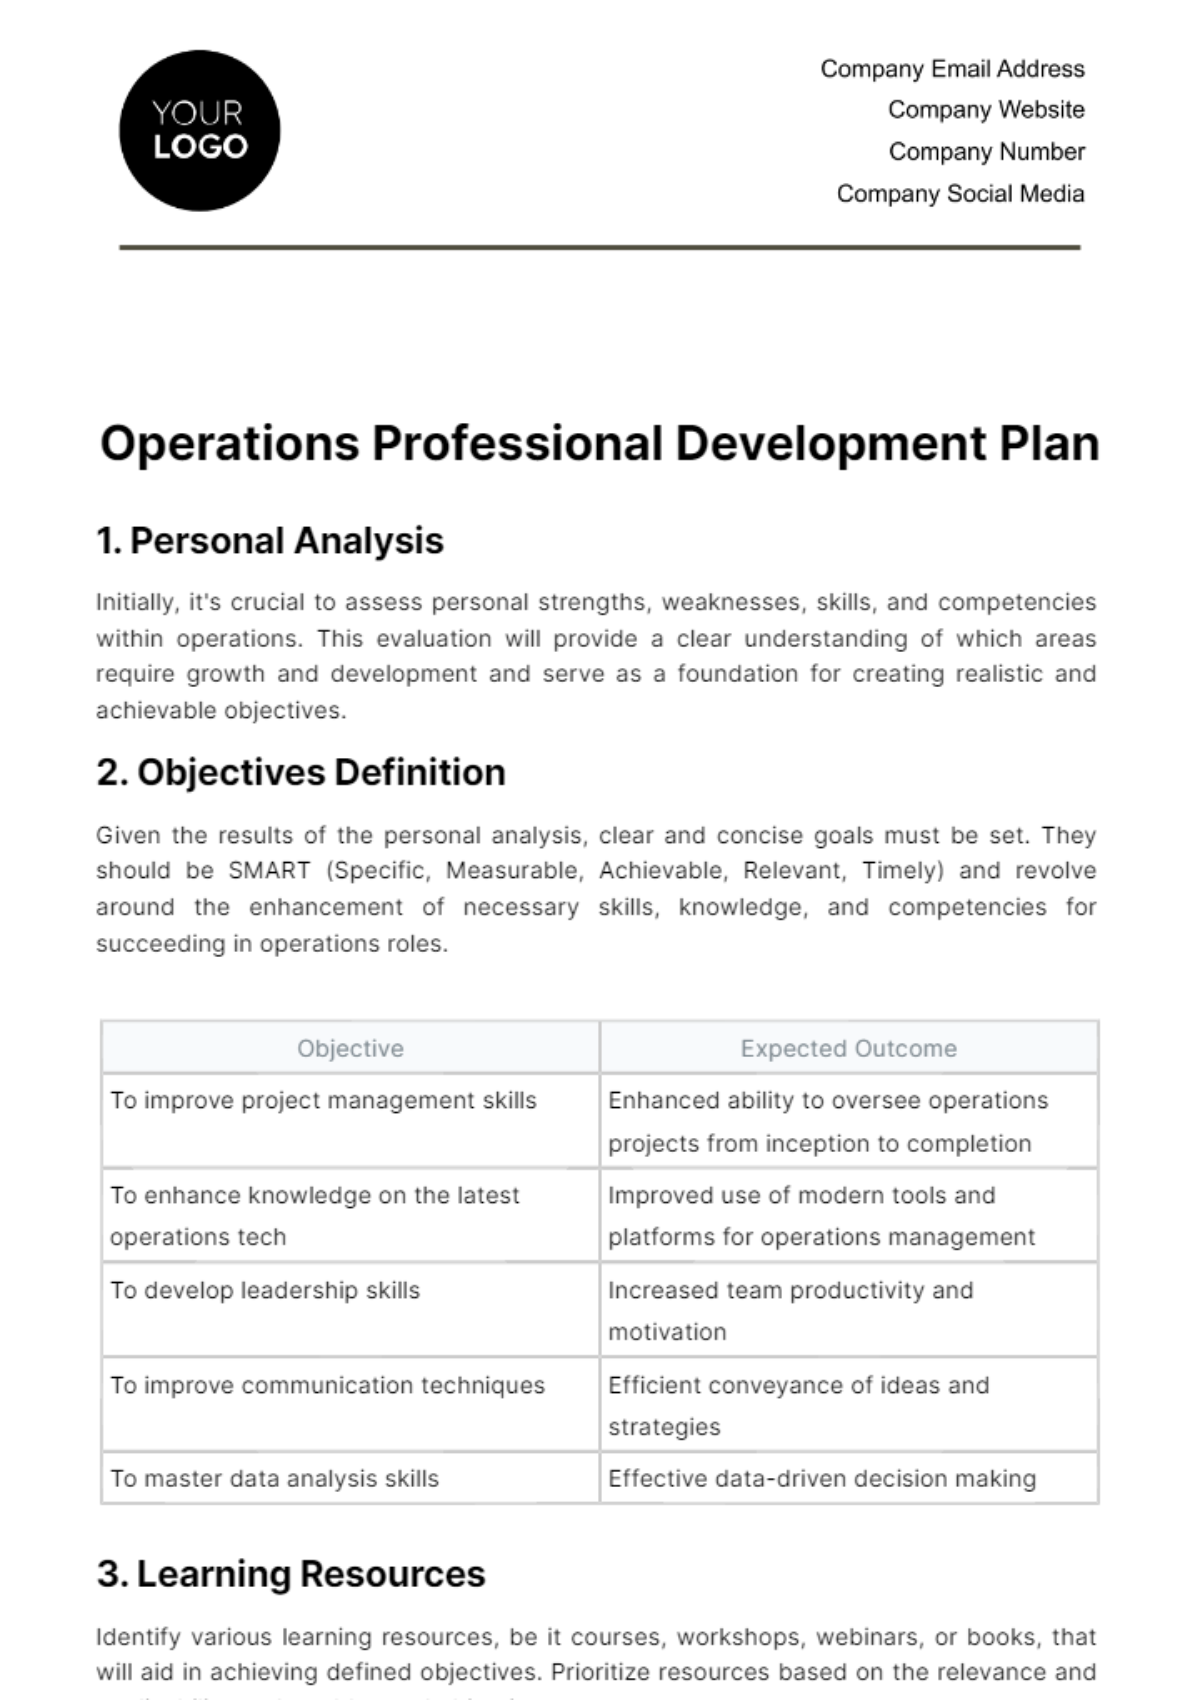 Free Operations Professional Development Plan Template